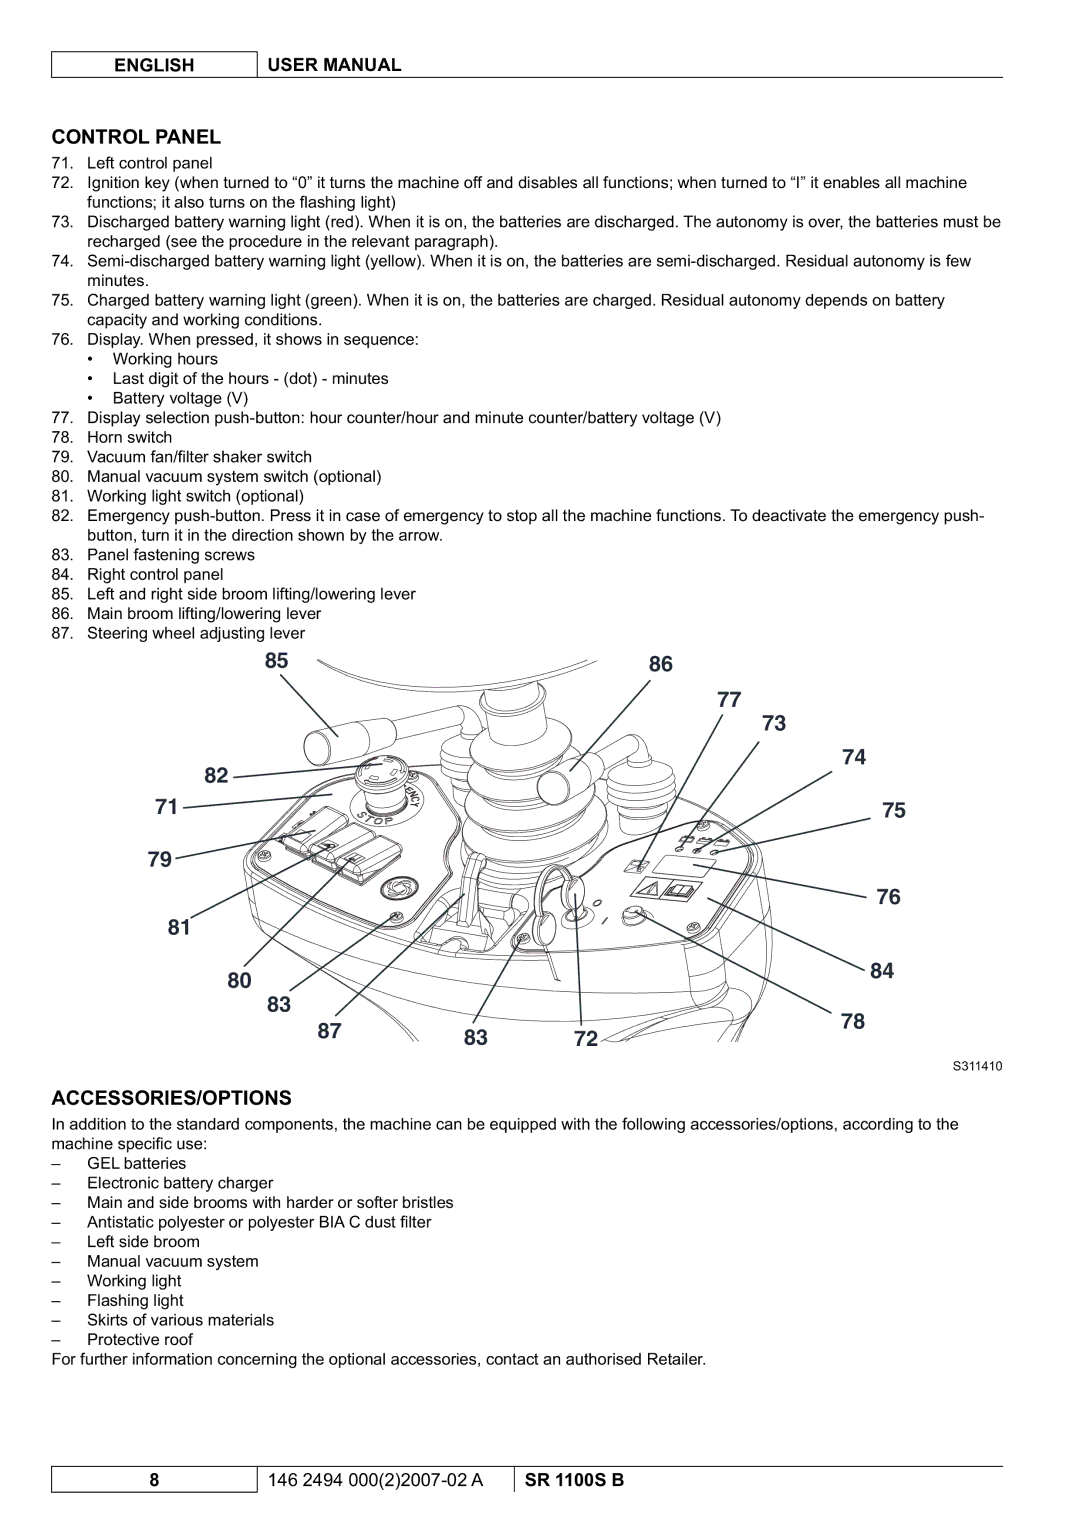 Nilfisk-Advance America SR 1100S B manual Control Panel, Accessories/Options 